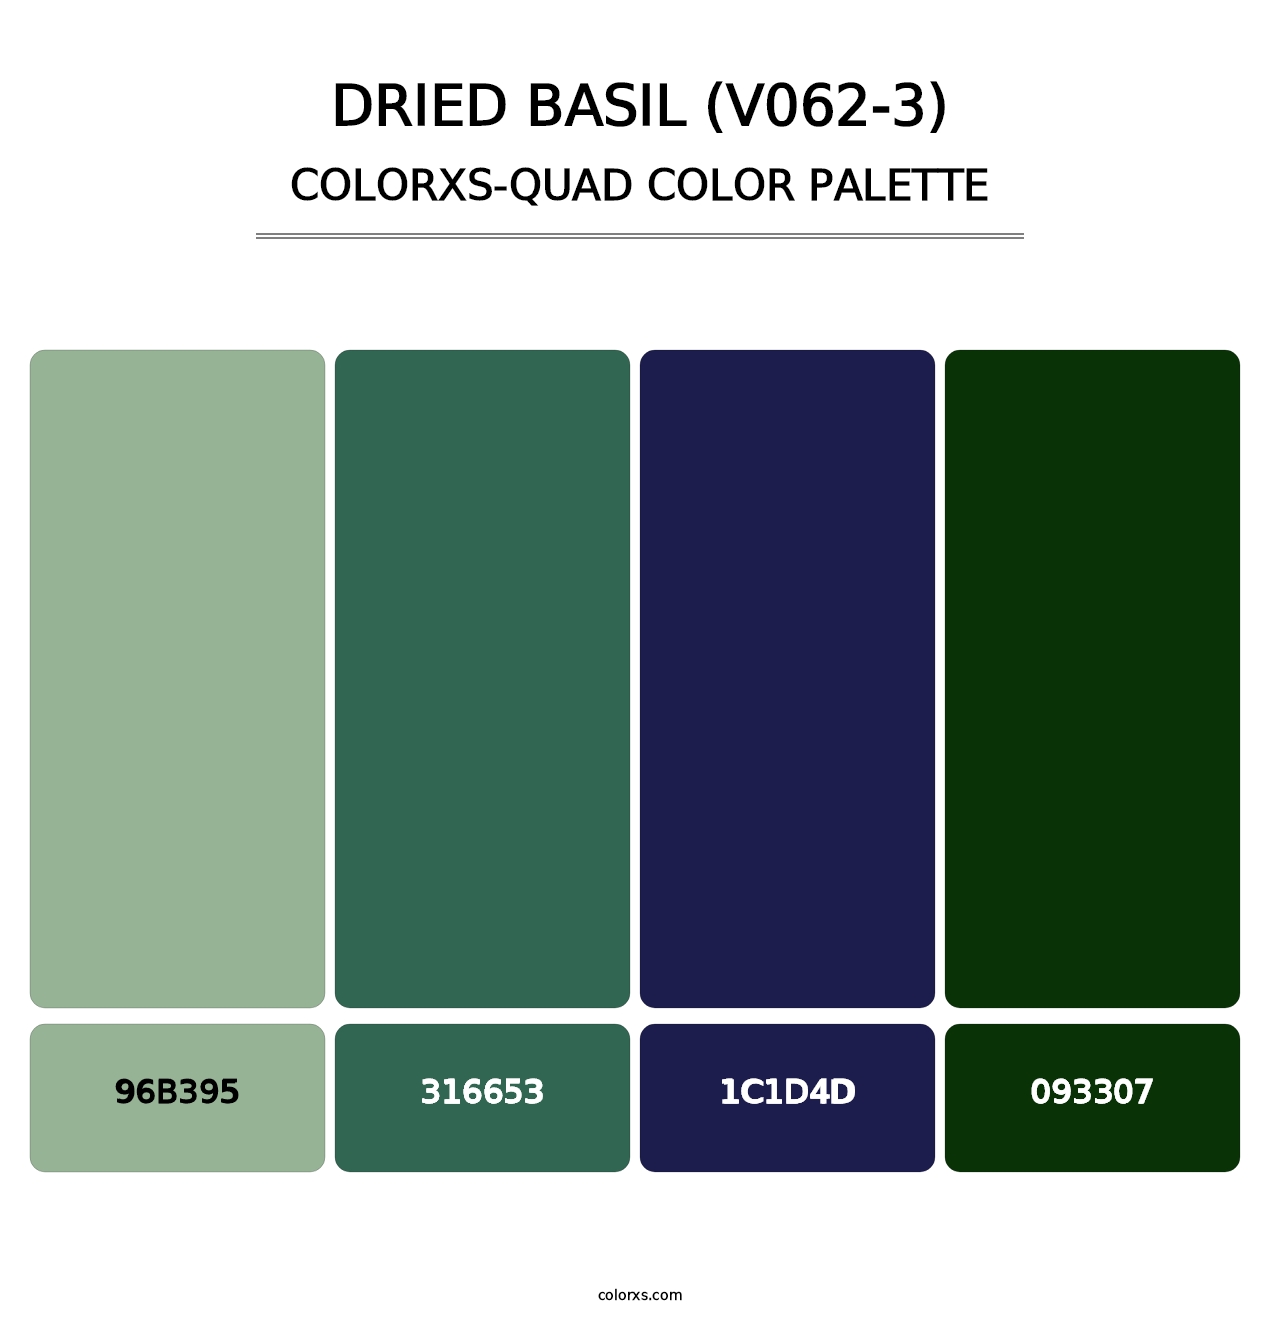 Dried Basil (V062-3) - Colorxs Quad Palette